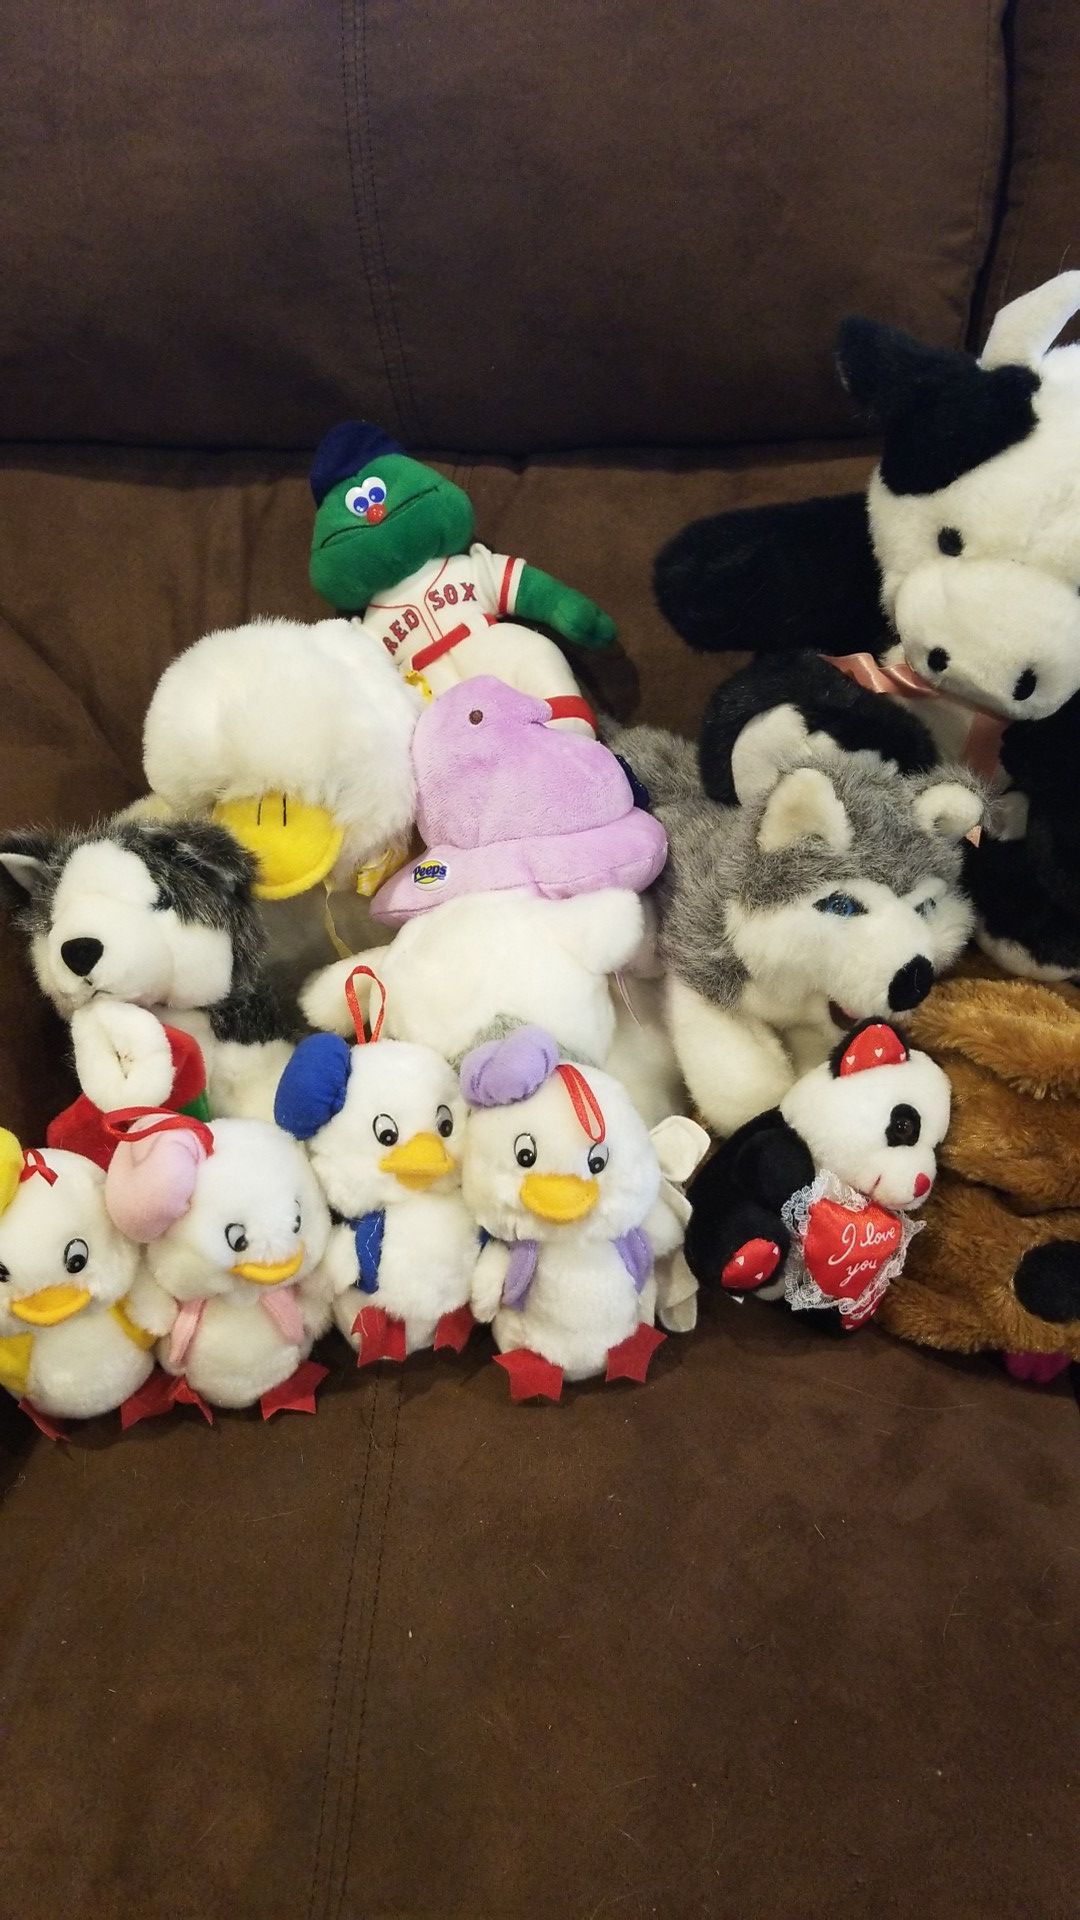 Random stuffed animals